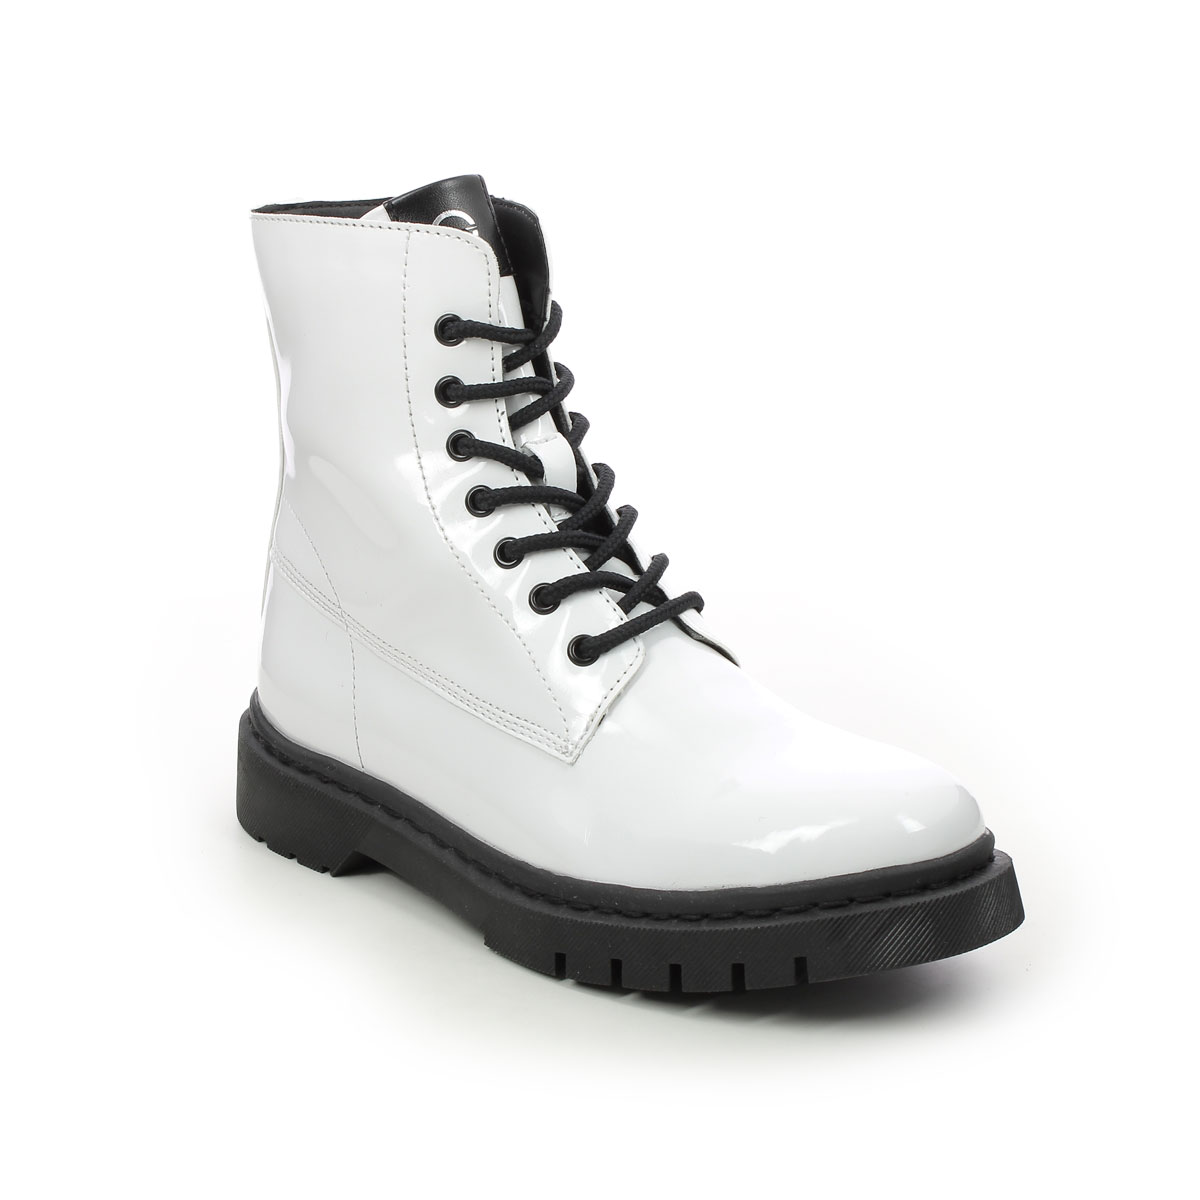 Tamaris Marisodoc White Patent Womens Biker Boots 25833-27-123 In Size 41 In Plain White Patent